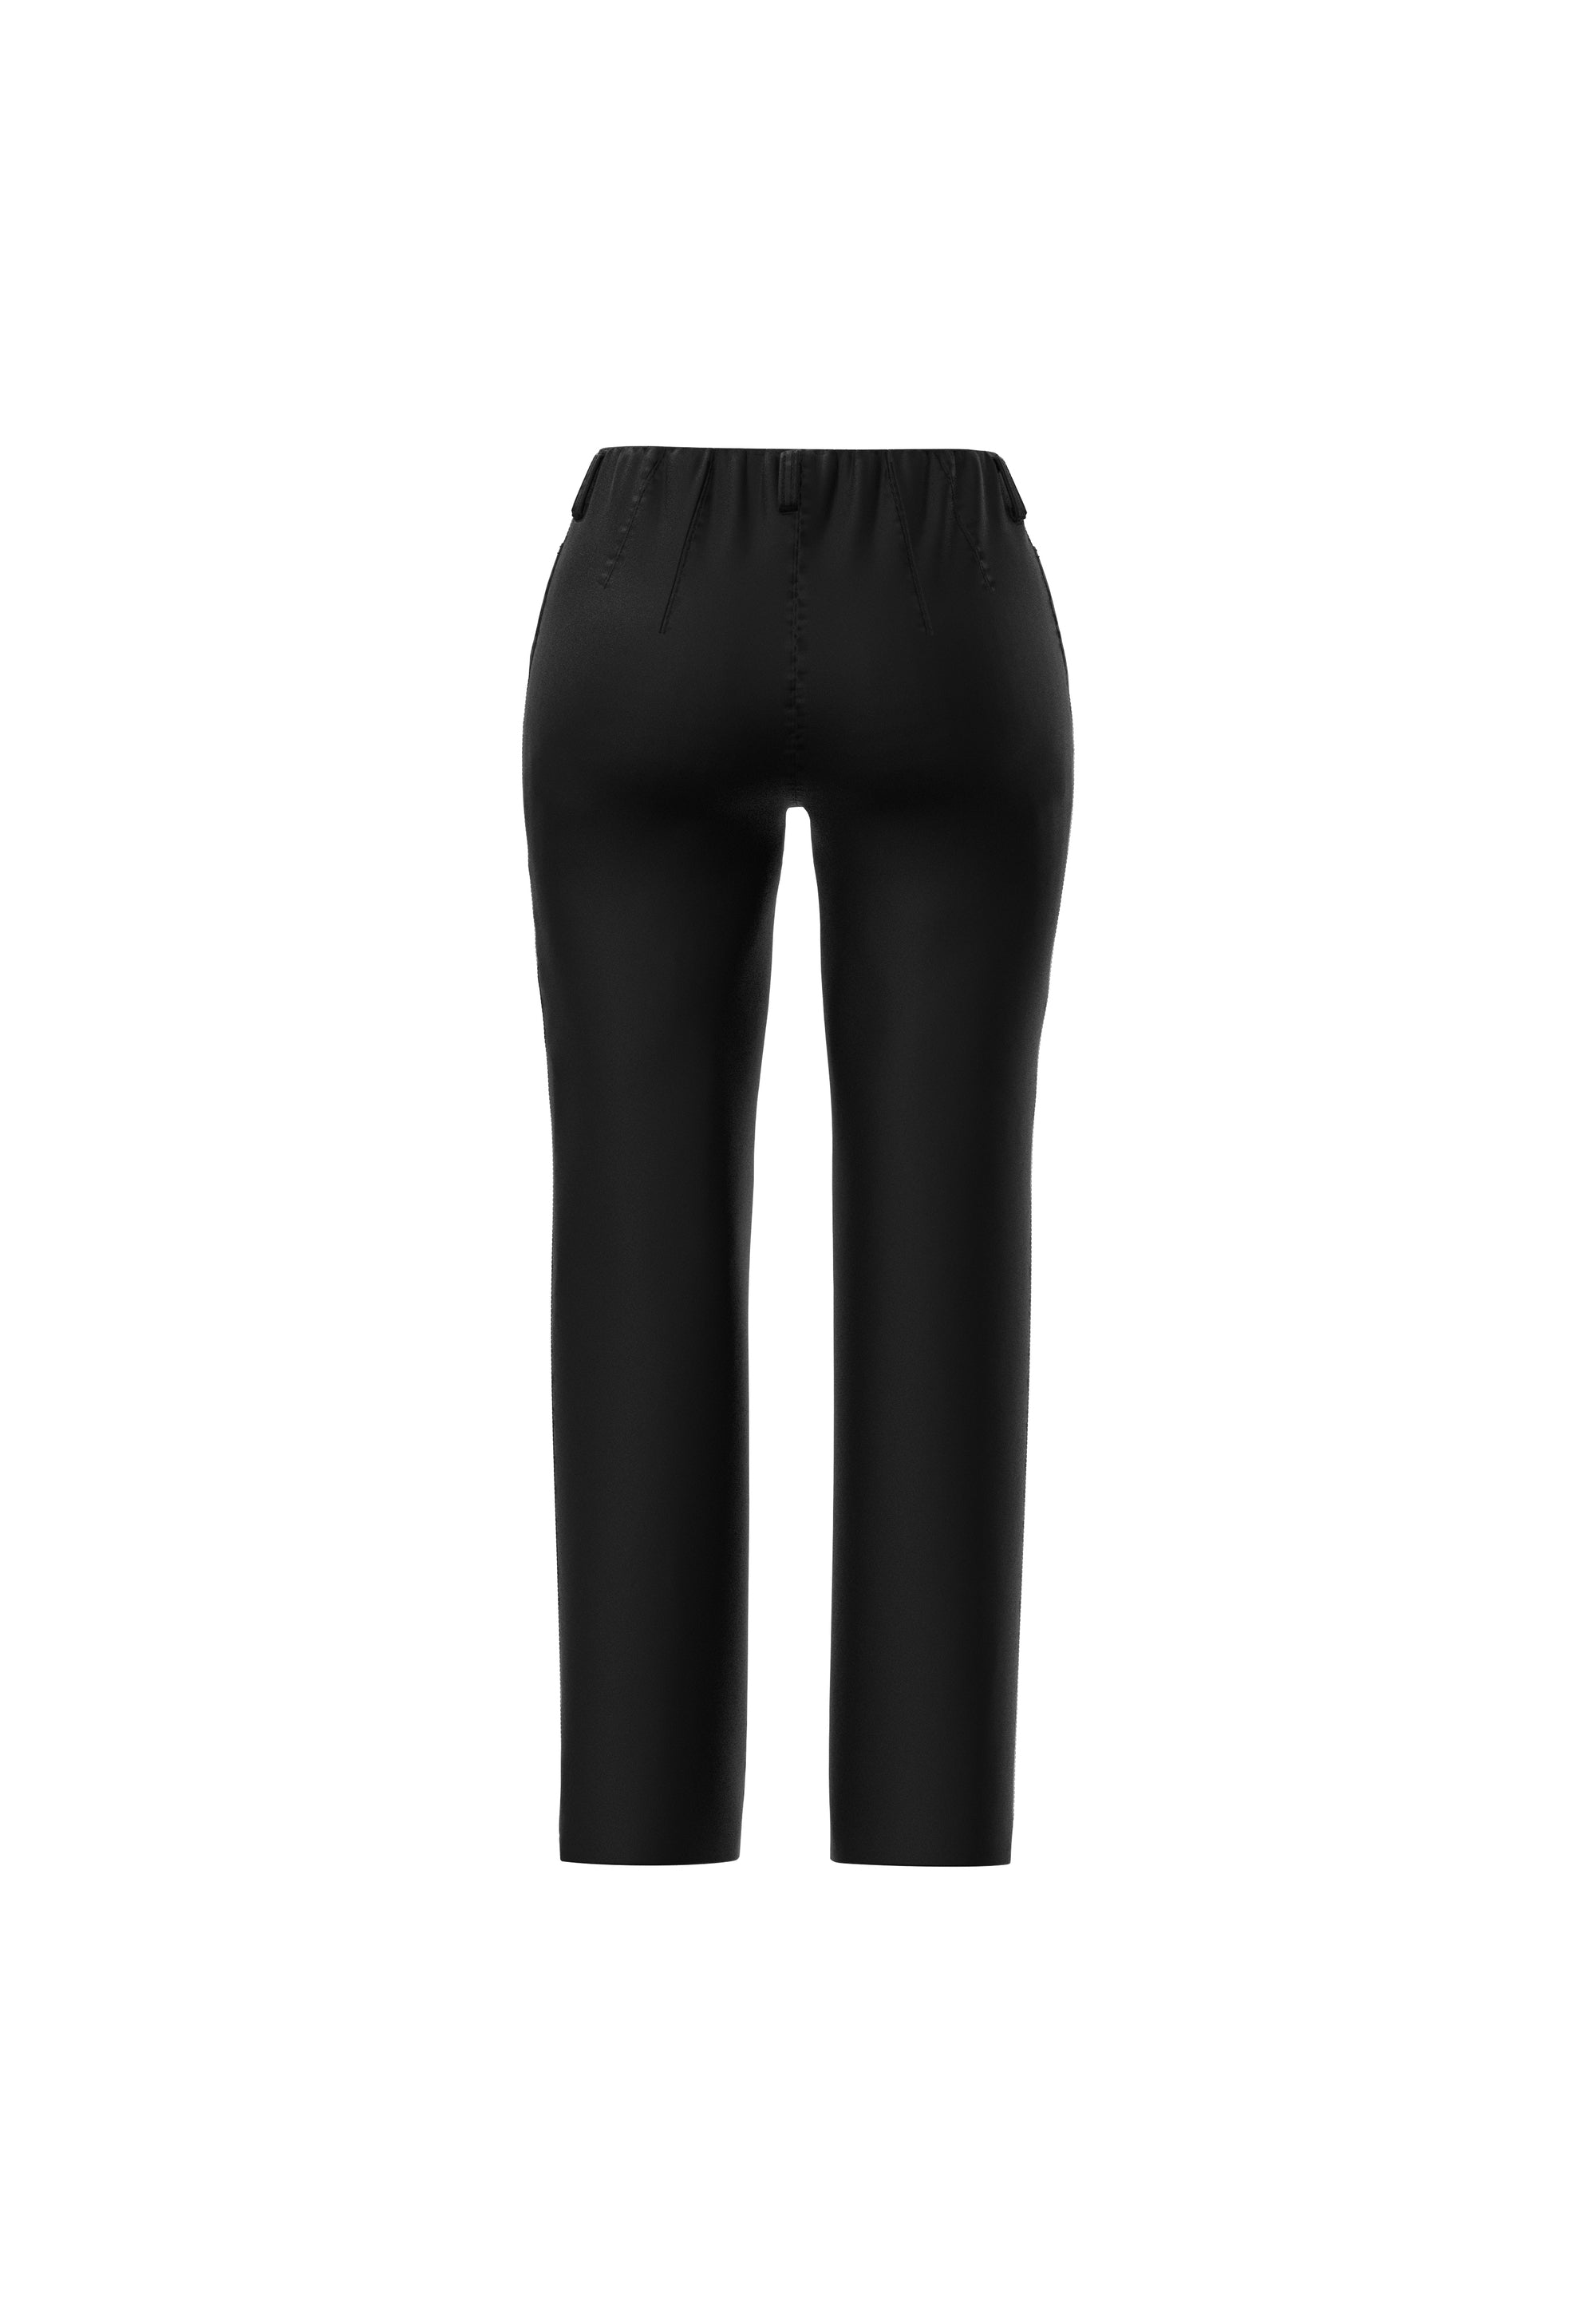 LAURIE  Kelly Regular - Medium Length Trousers REGULAR 99971 Black Brushed